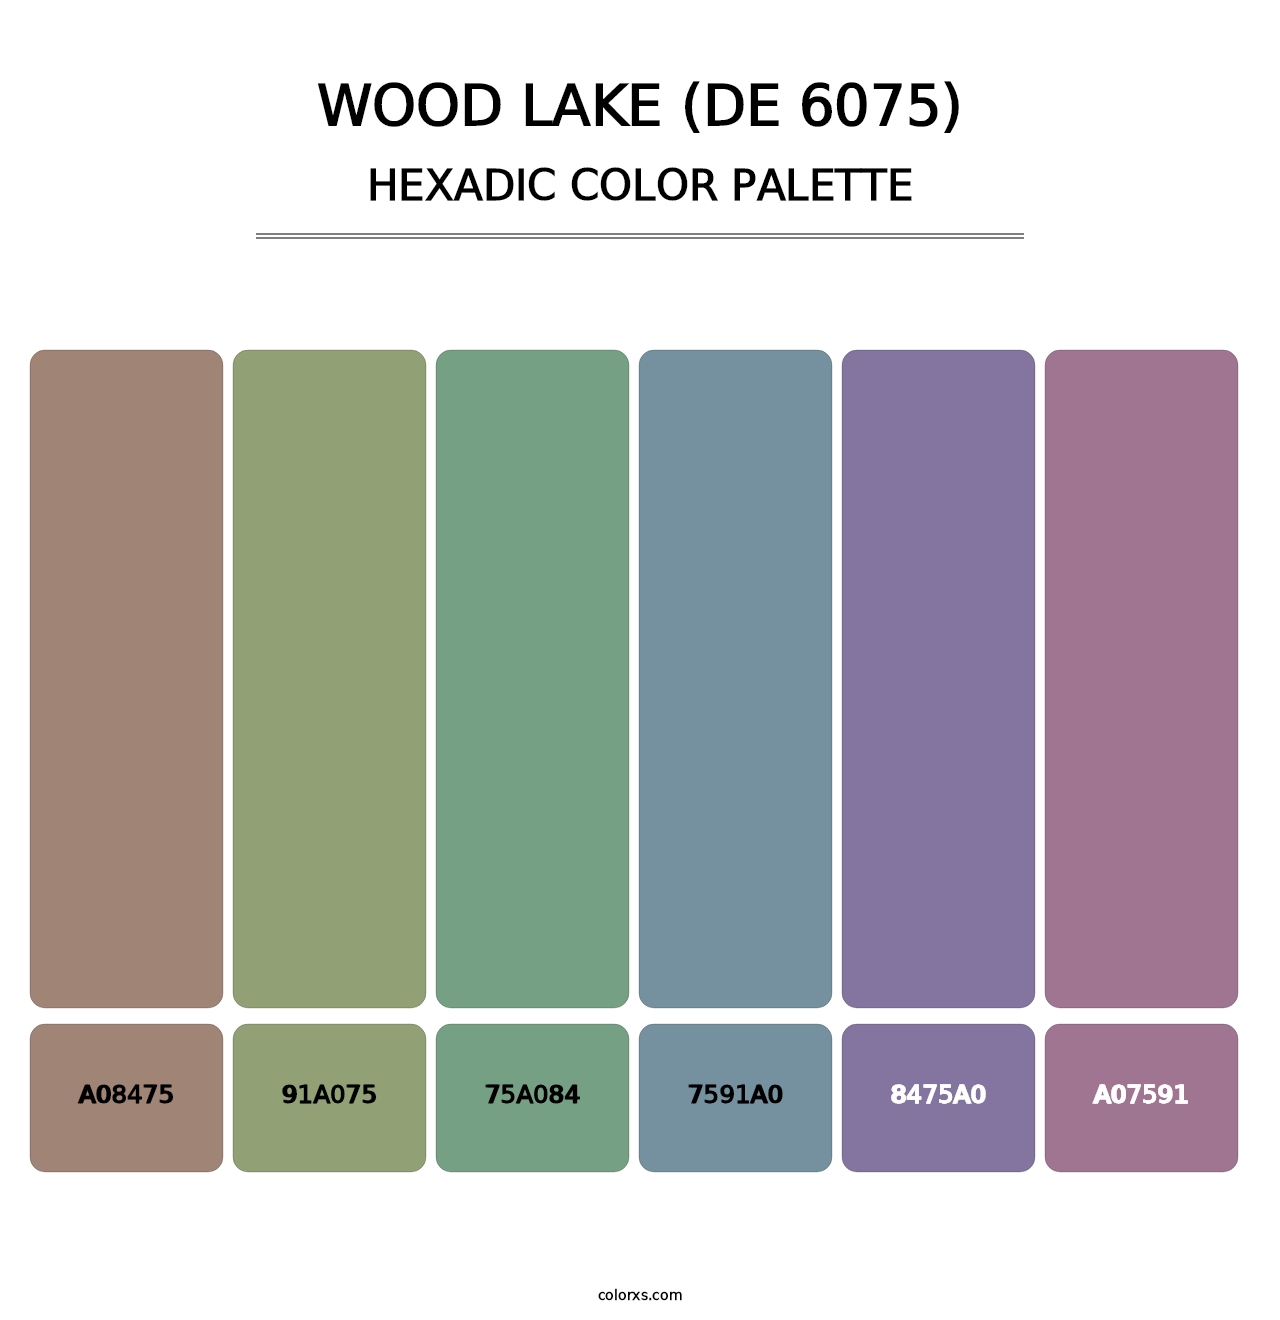 Wood Lake (DE 6075) - Hexadic Color Palette